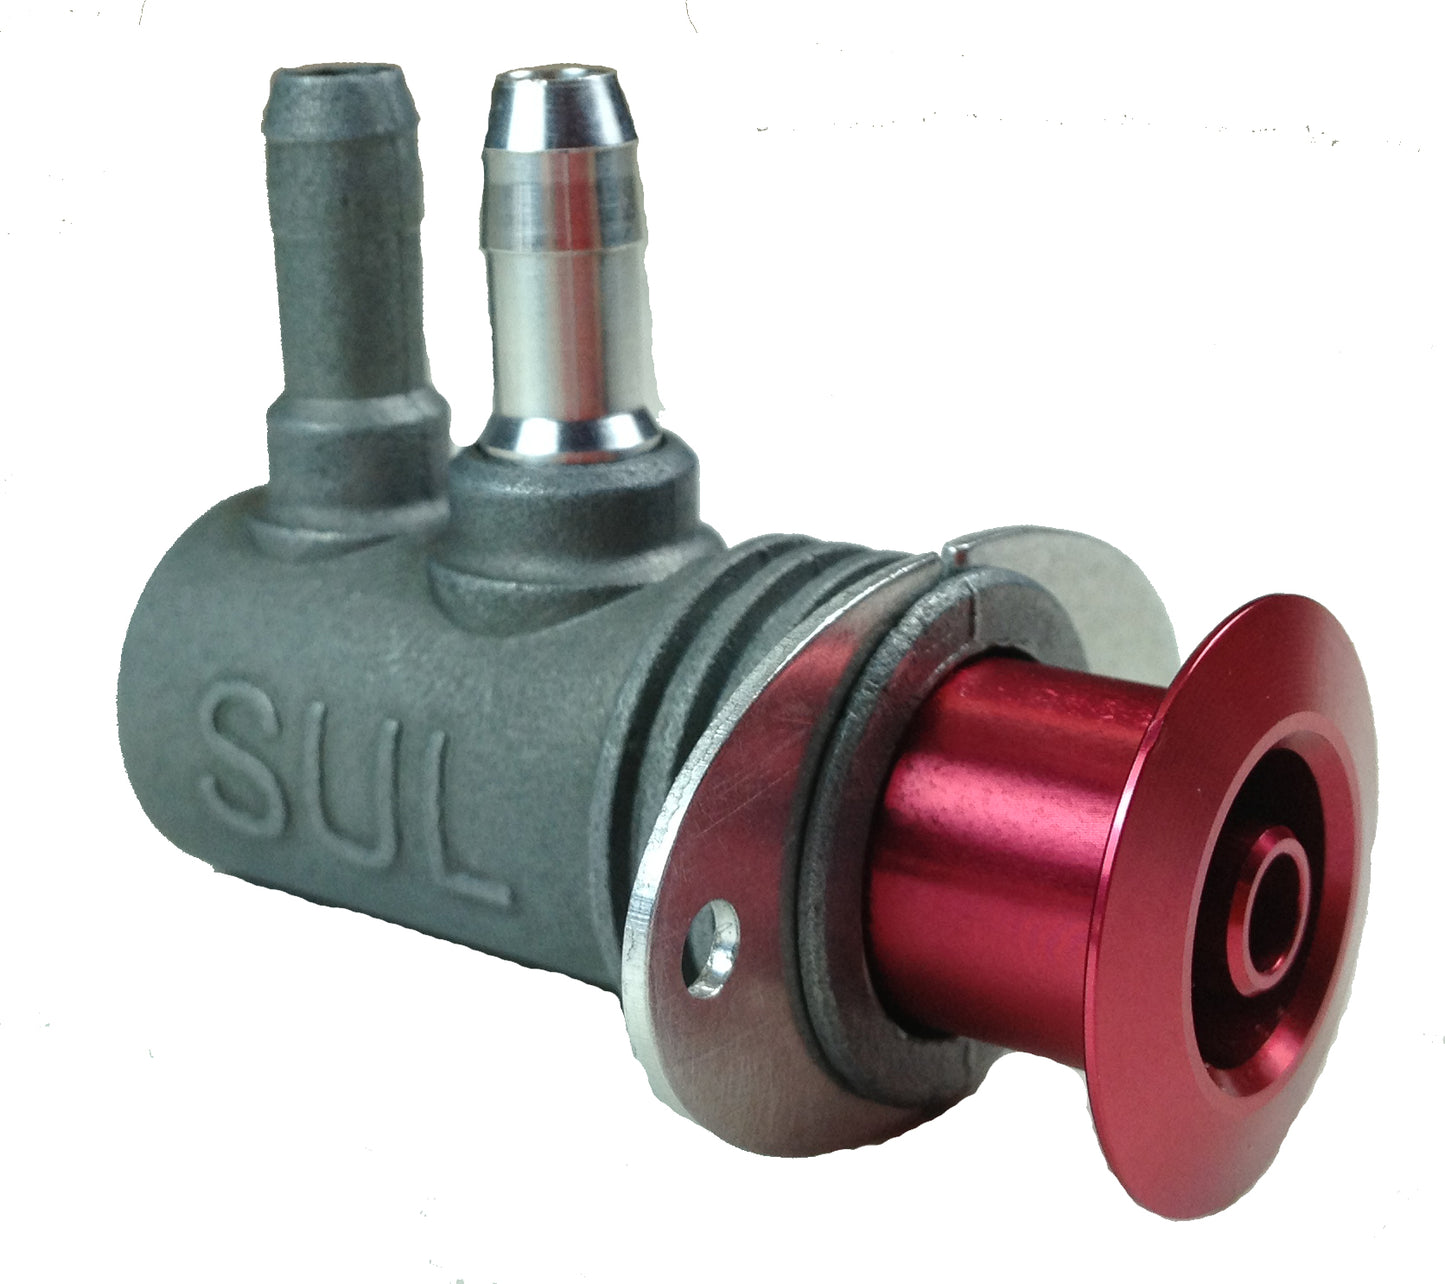 Sullivan 751 Heavy Duty Fuel Filler Valve